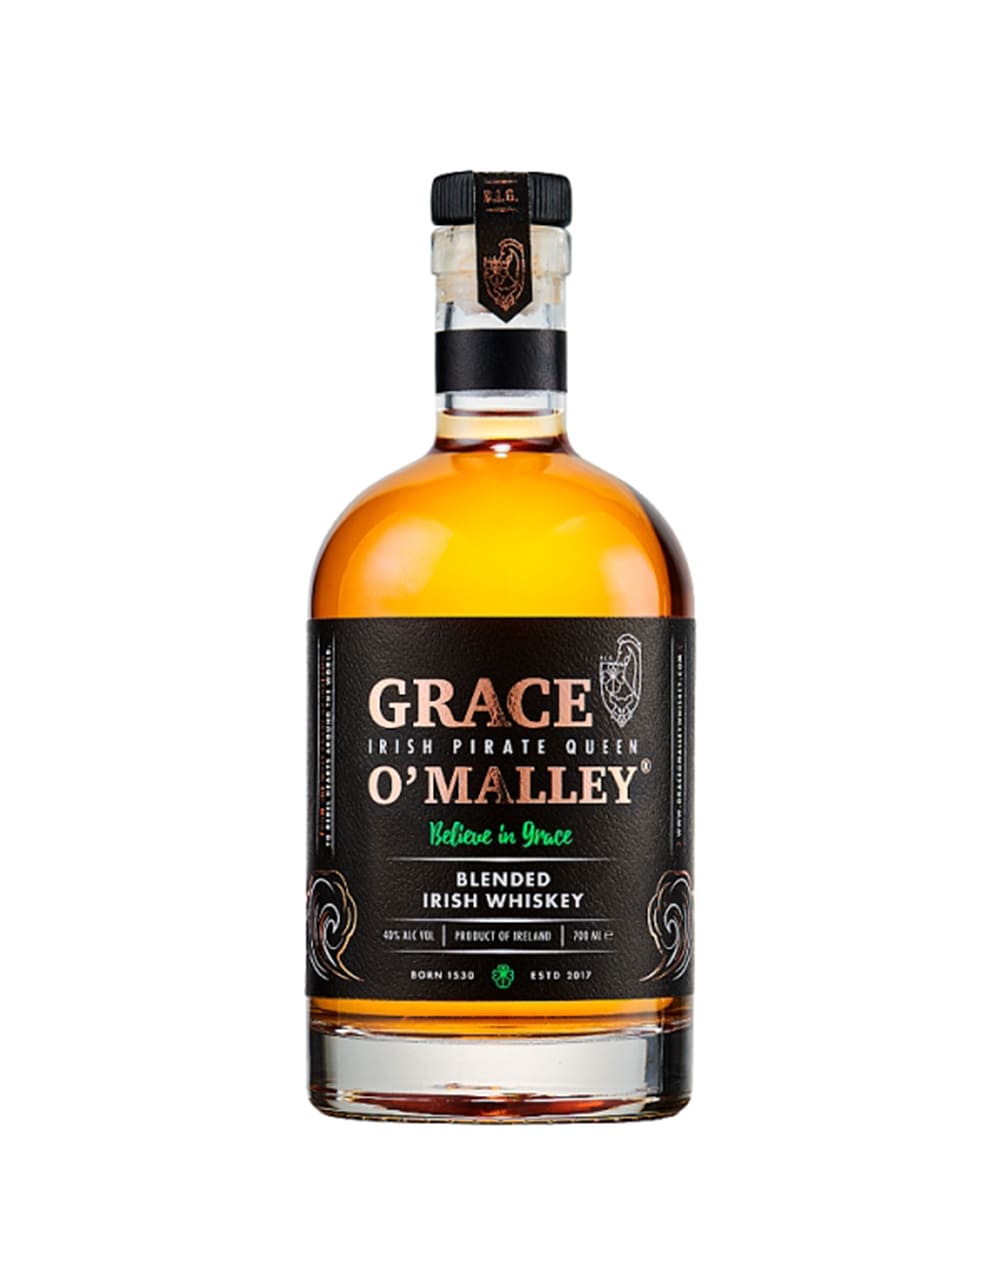 Grace O'Malley Irish Pirate Queen Blended Irish Whiskey